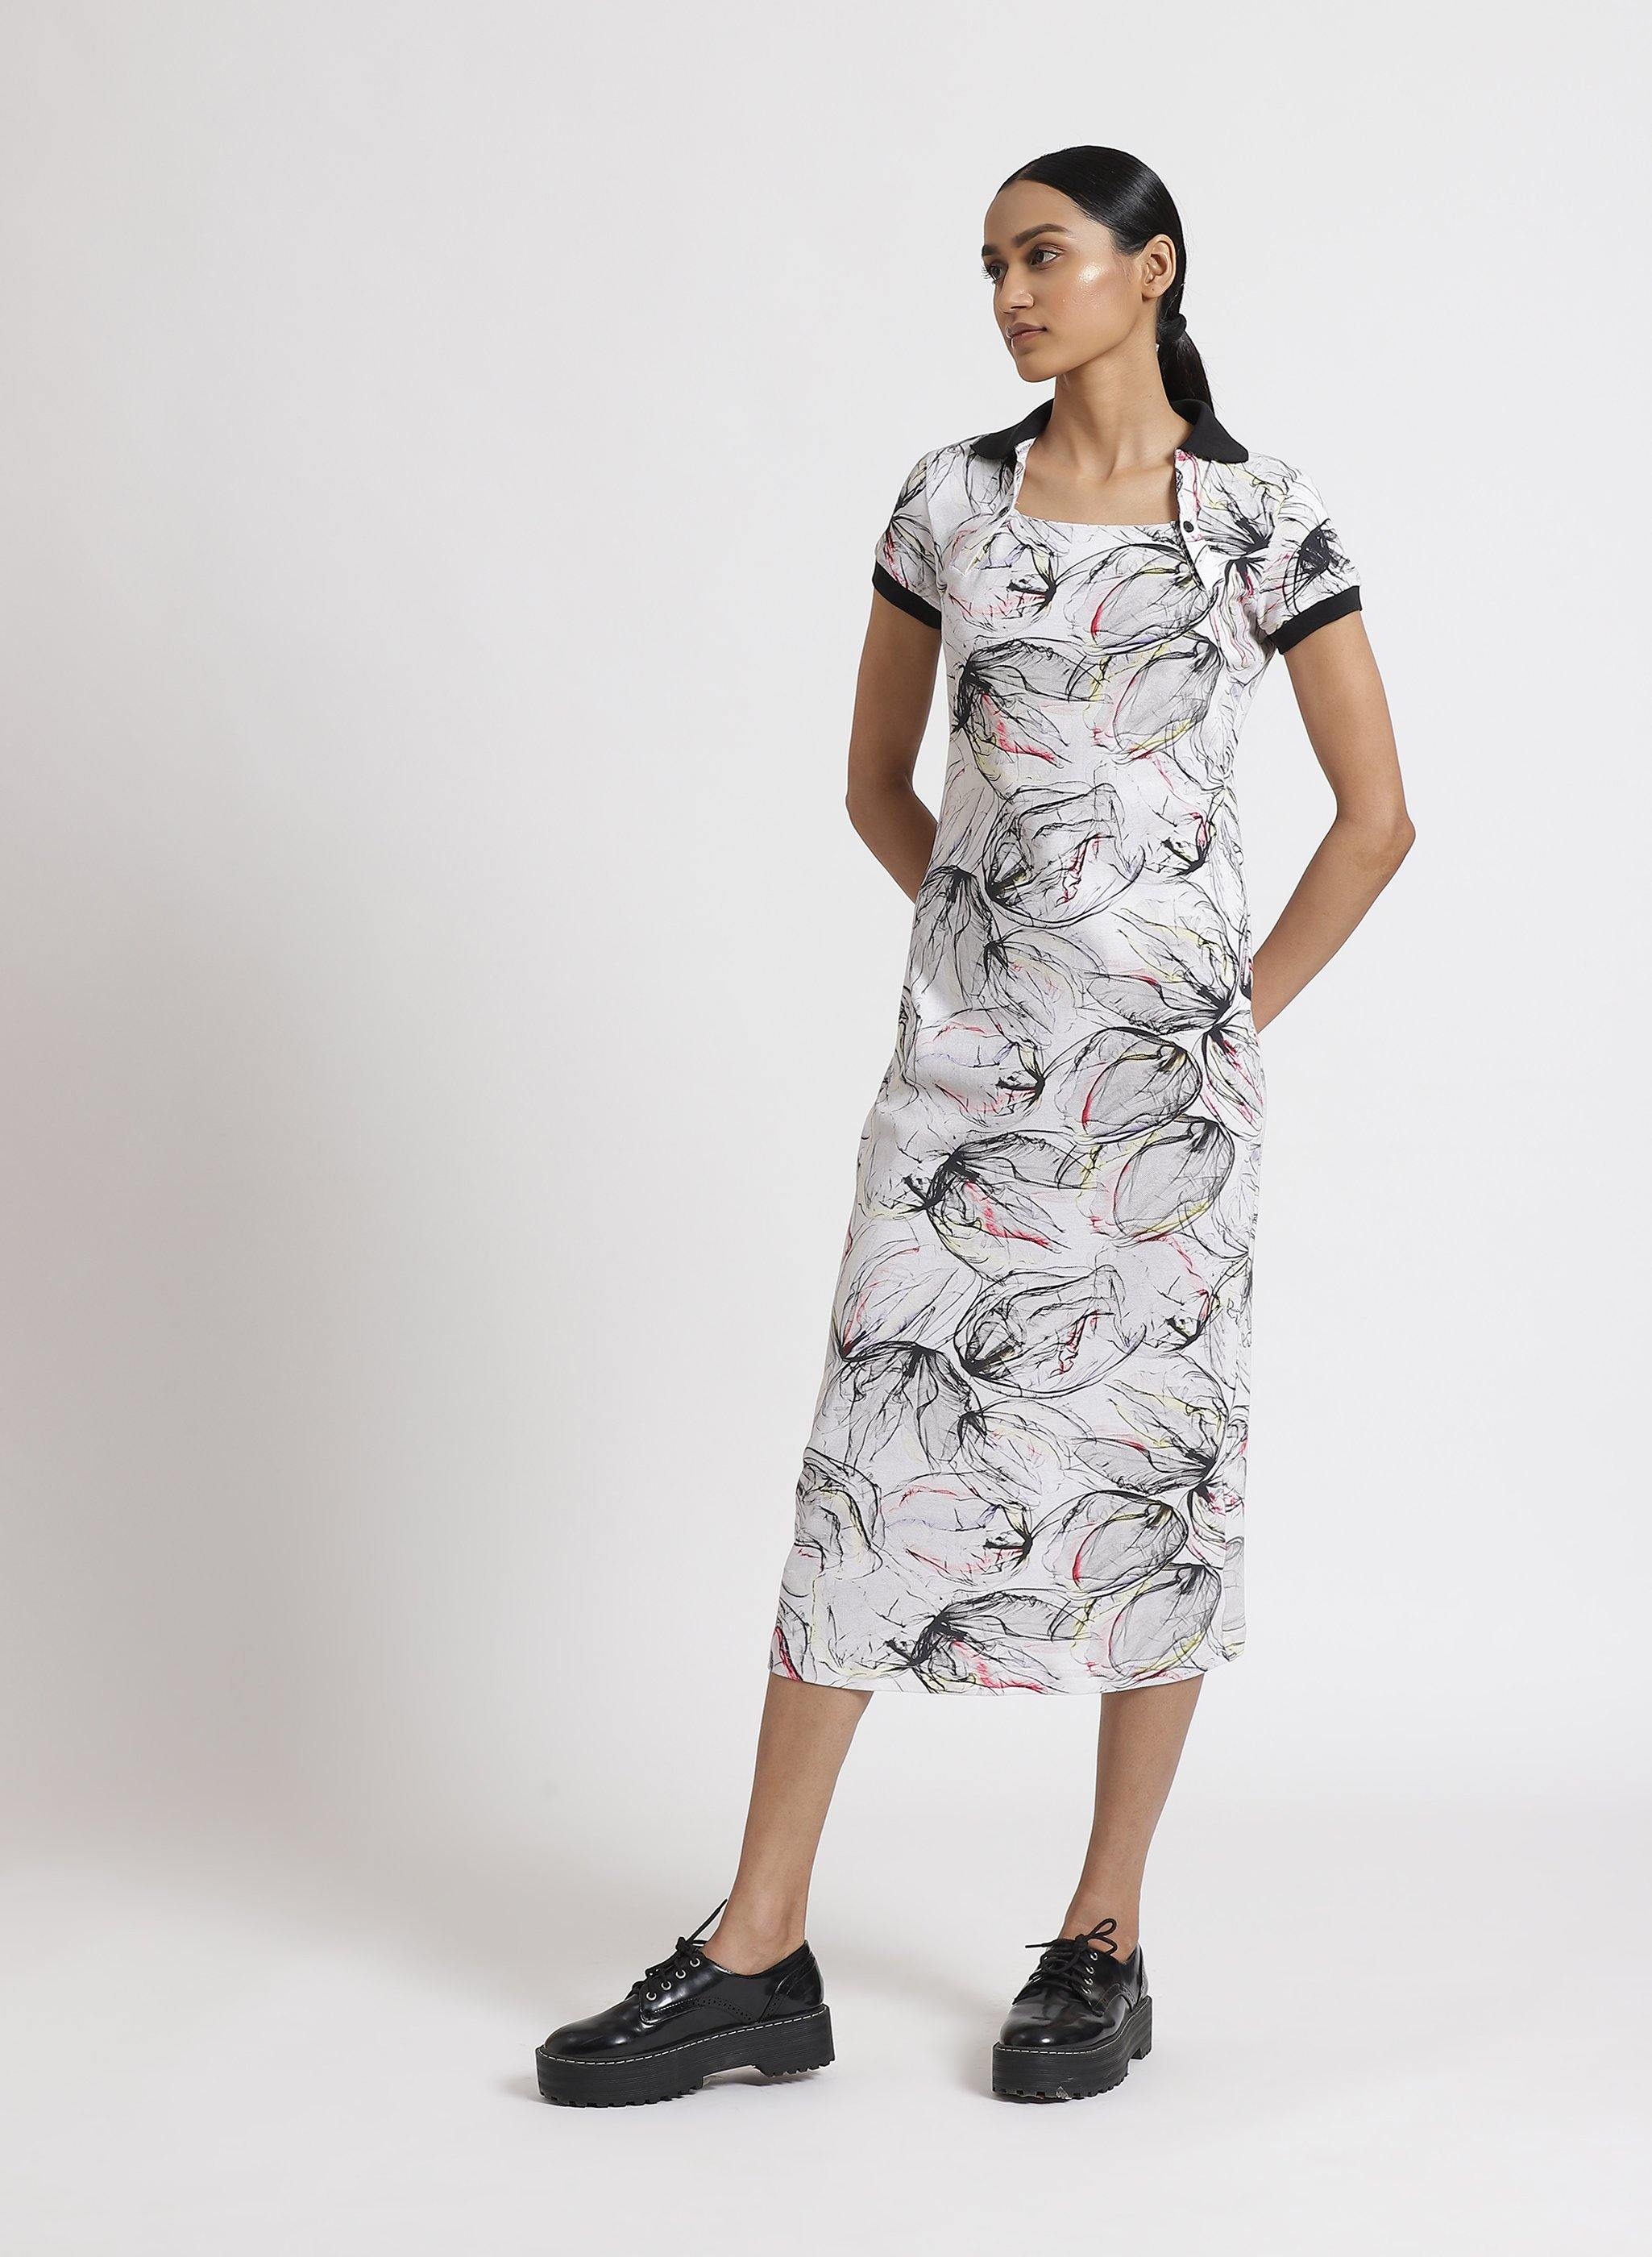 Celosia Dress- Genes online store 2020